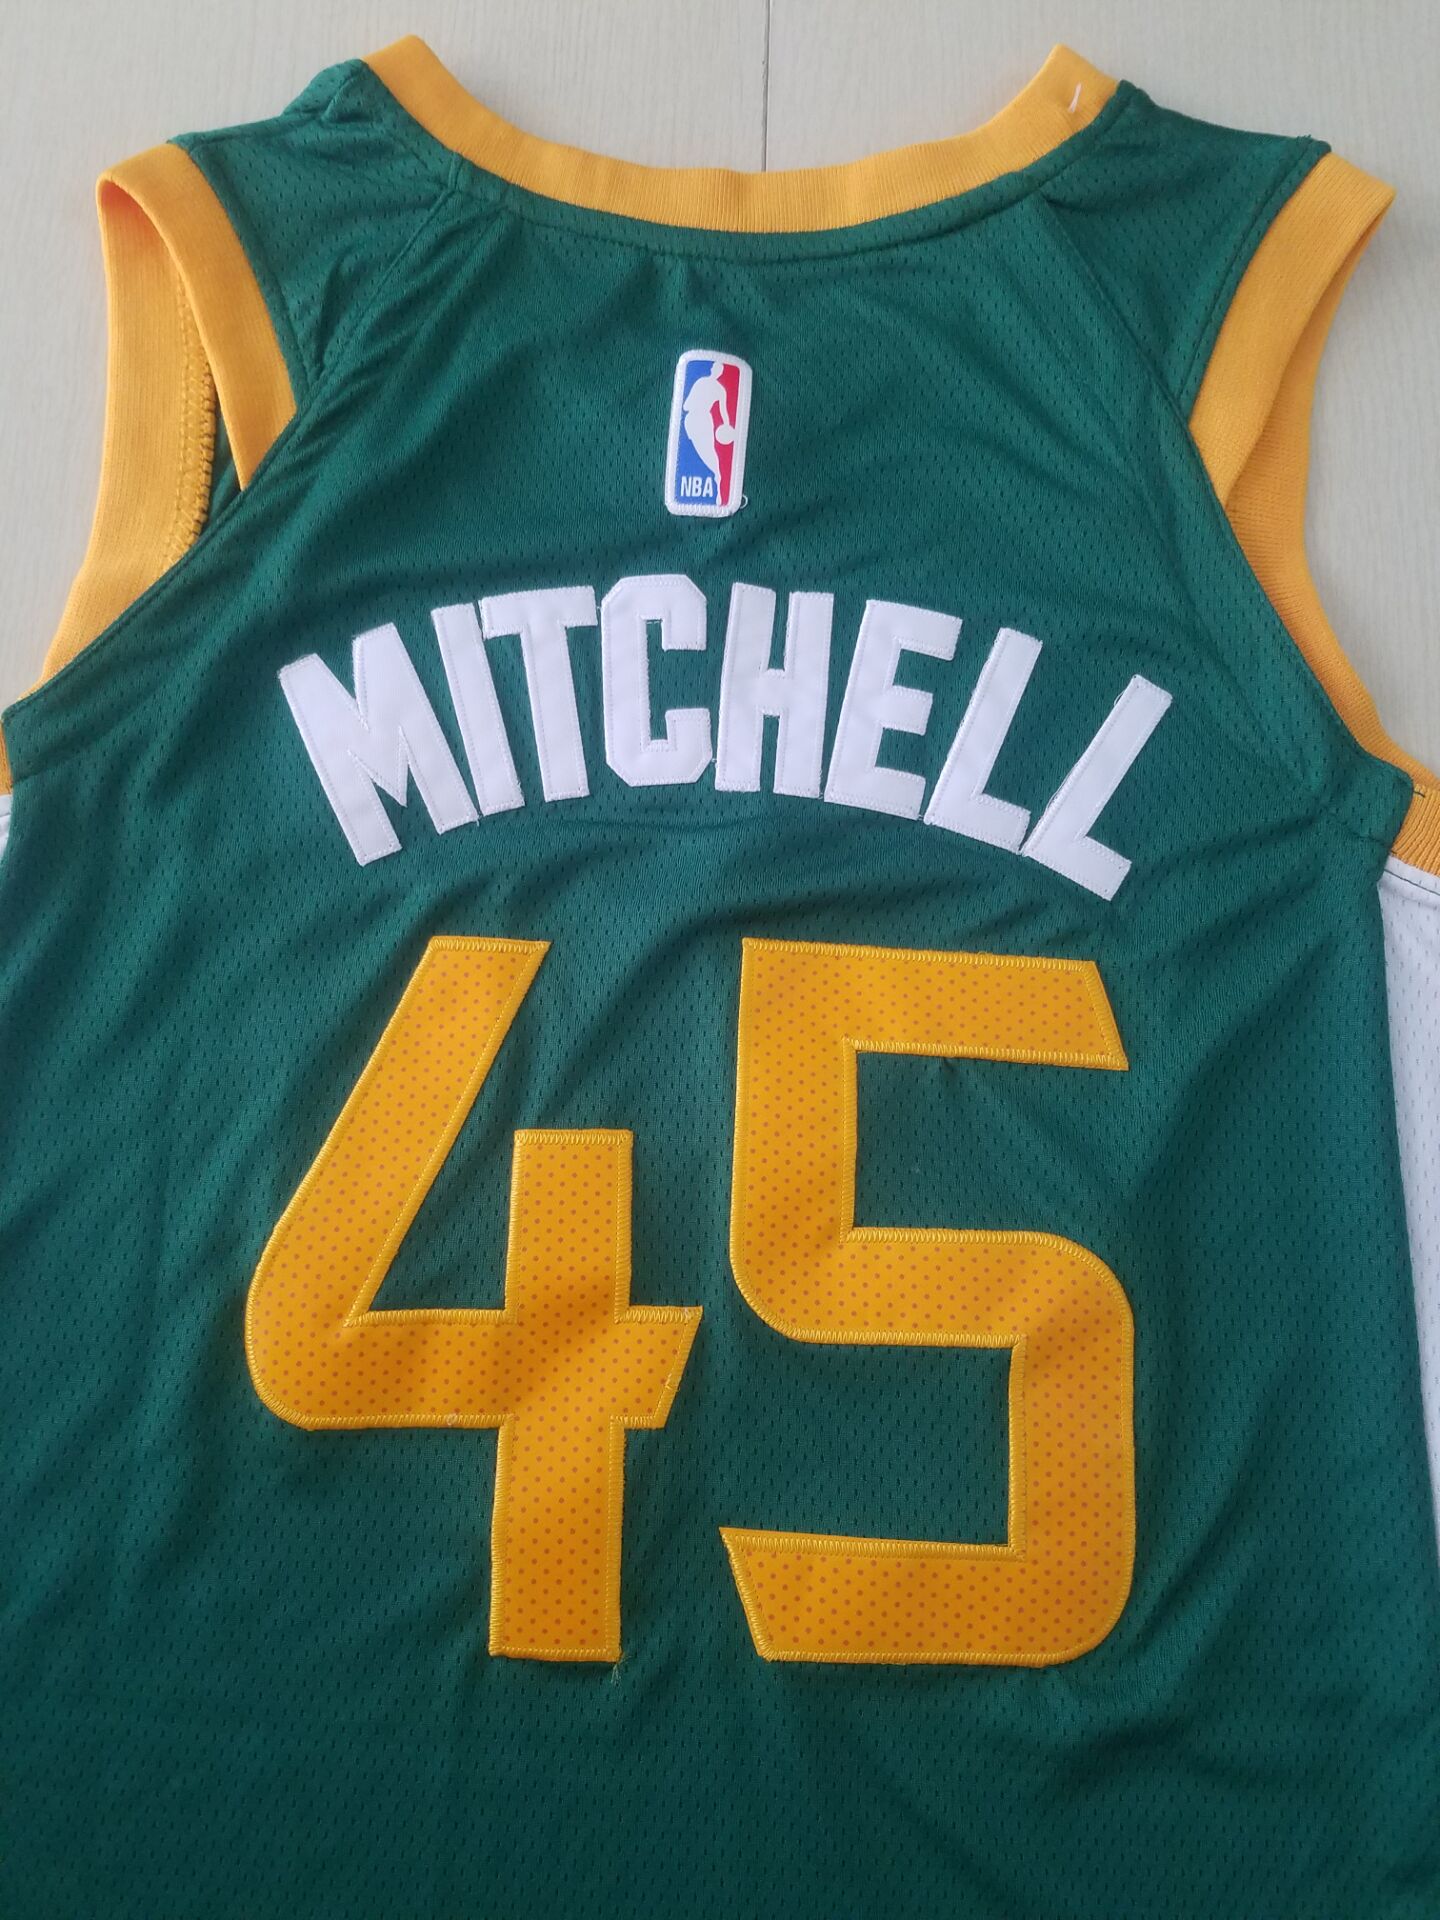 Men's Utah Jazz Donovan Mitchell #45 Green 2020/21 Swingman Player Jersey